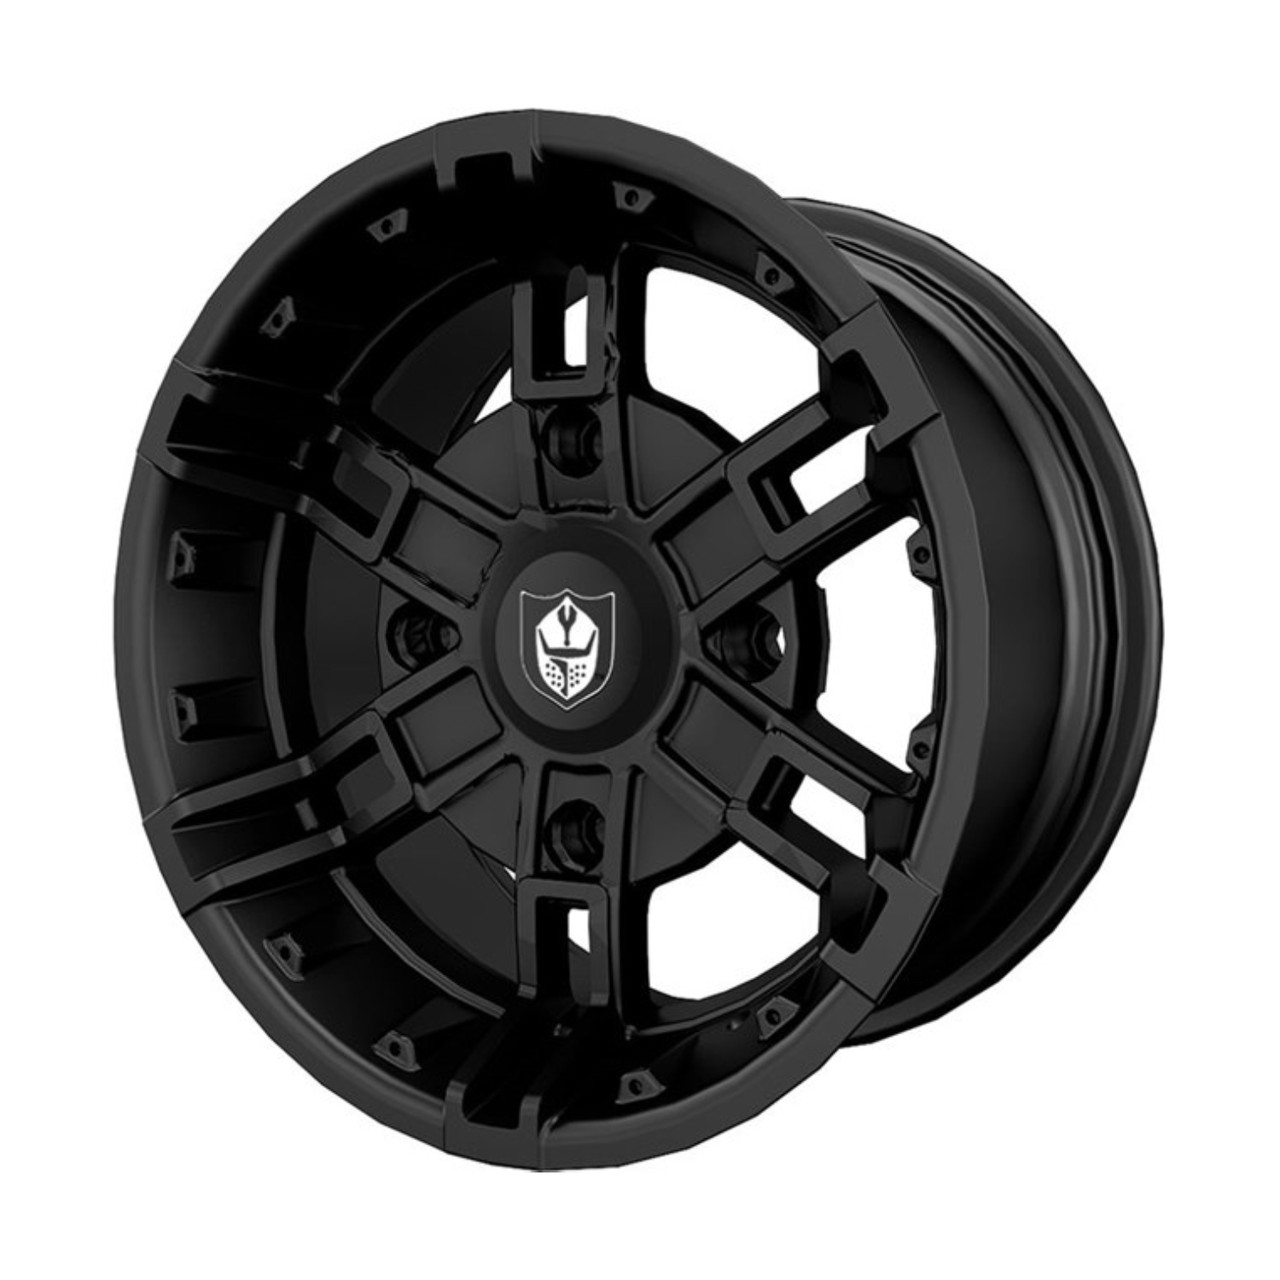 Polaris New OEM Pro Armor Wheel & Tire Set: Buckle & Harvester, 27R14, 2882384